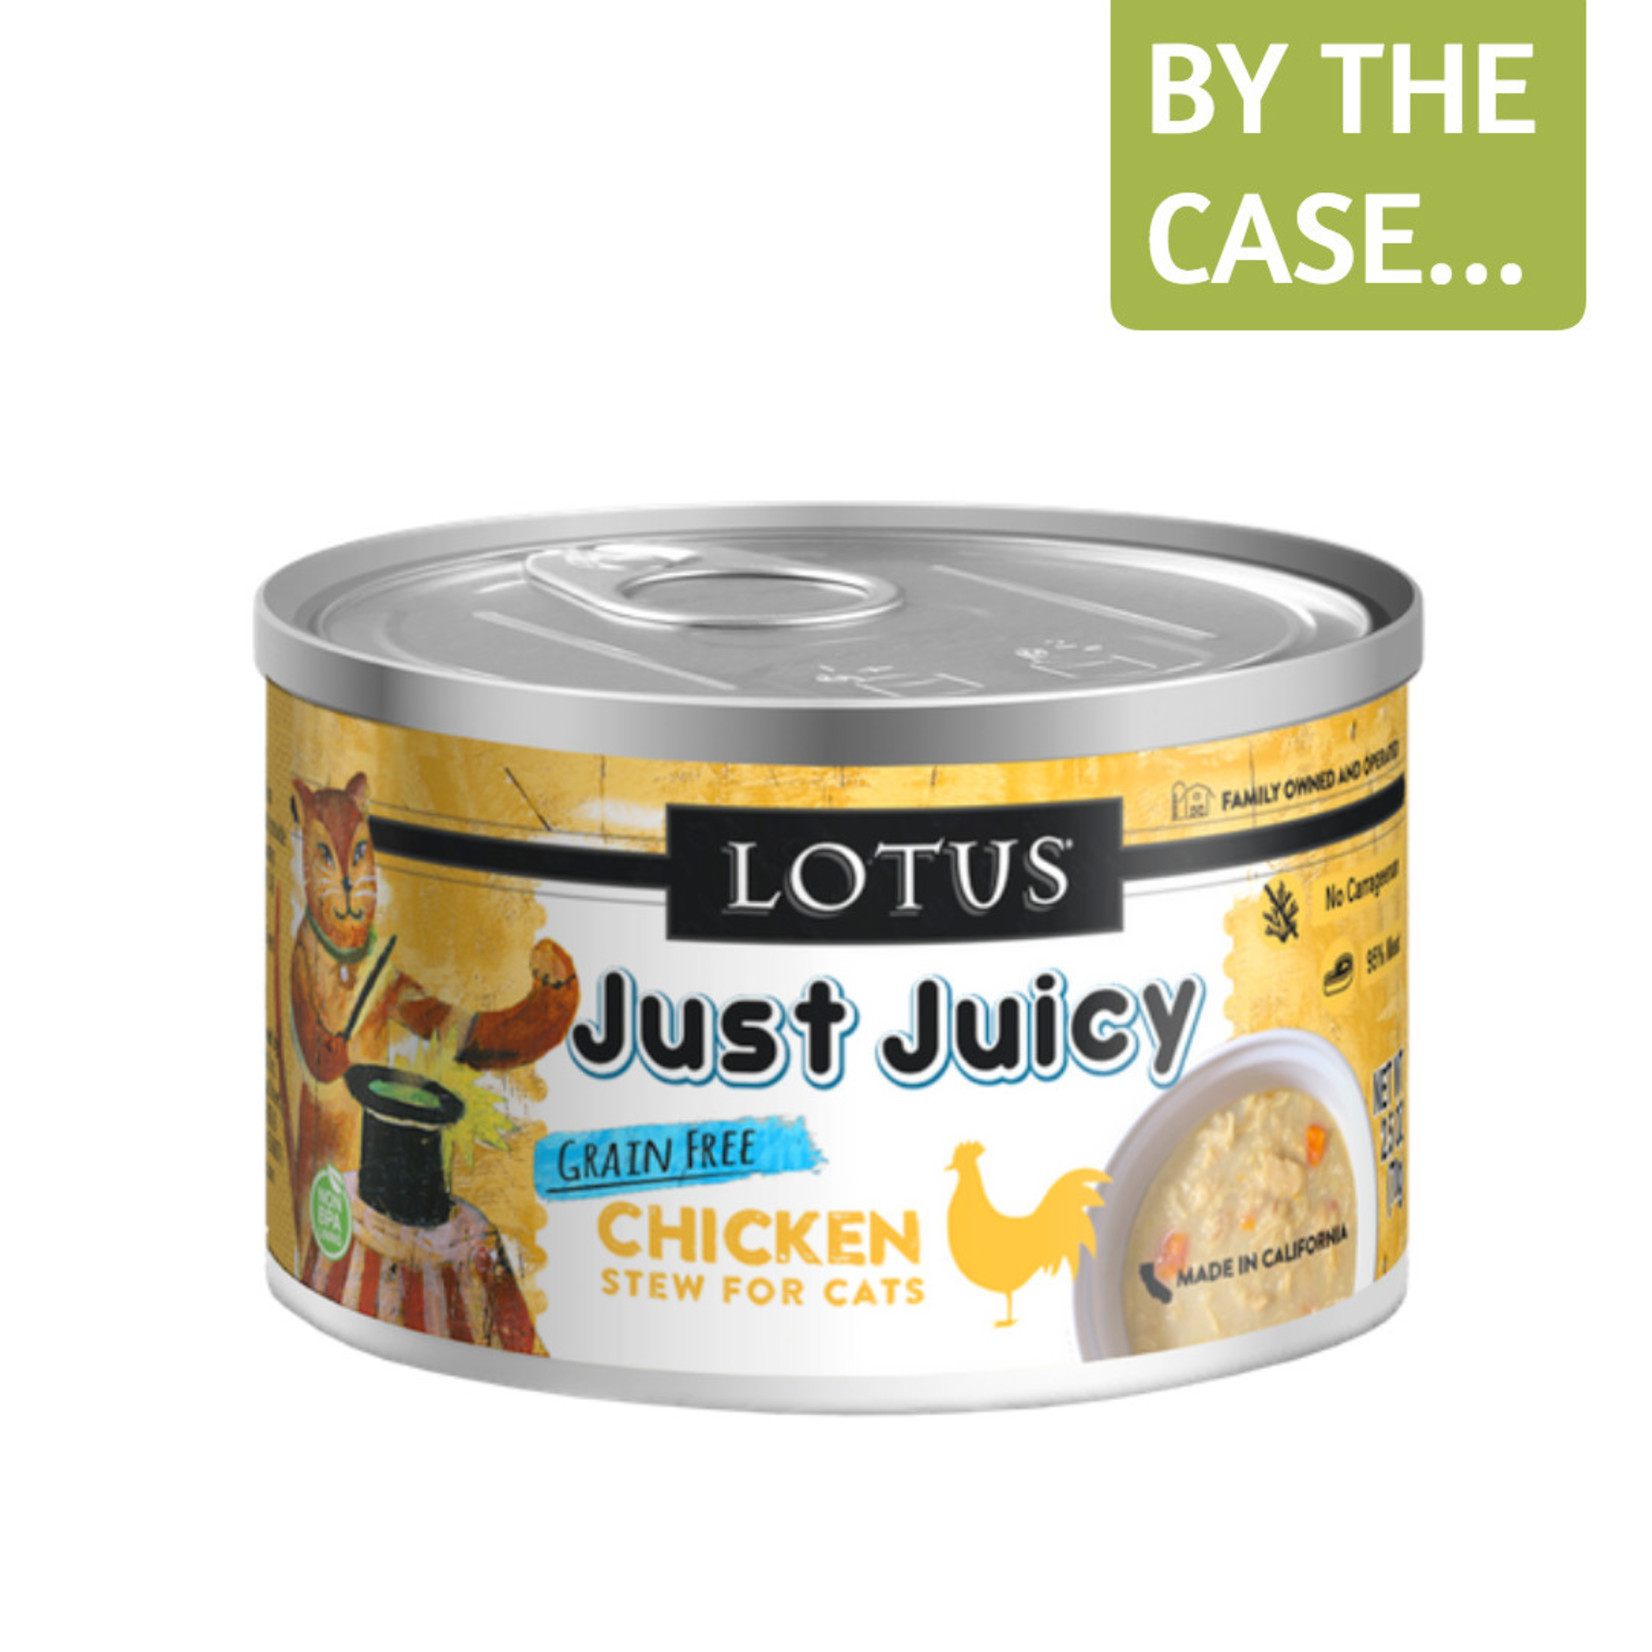 Lotus Wet Cat Food Just Juicy Chicken Stew for Cats 2.5oz Grain Free